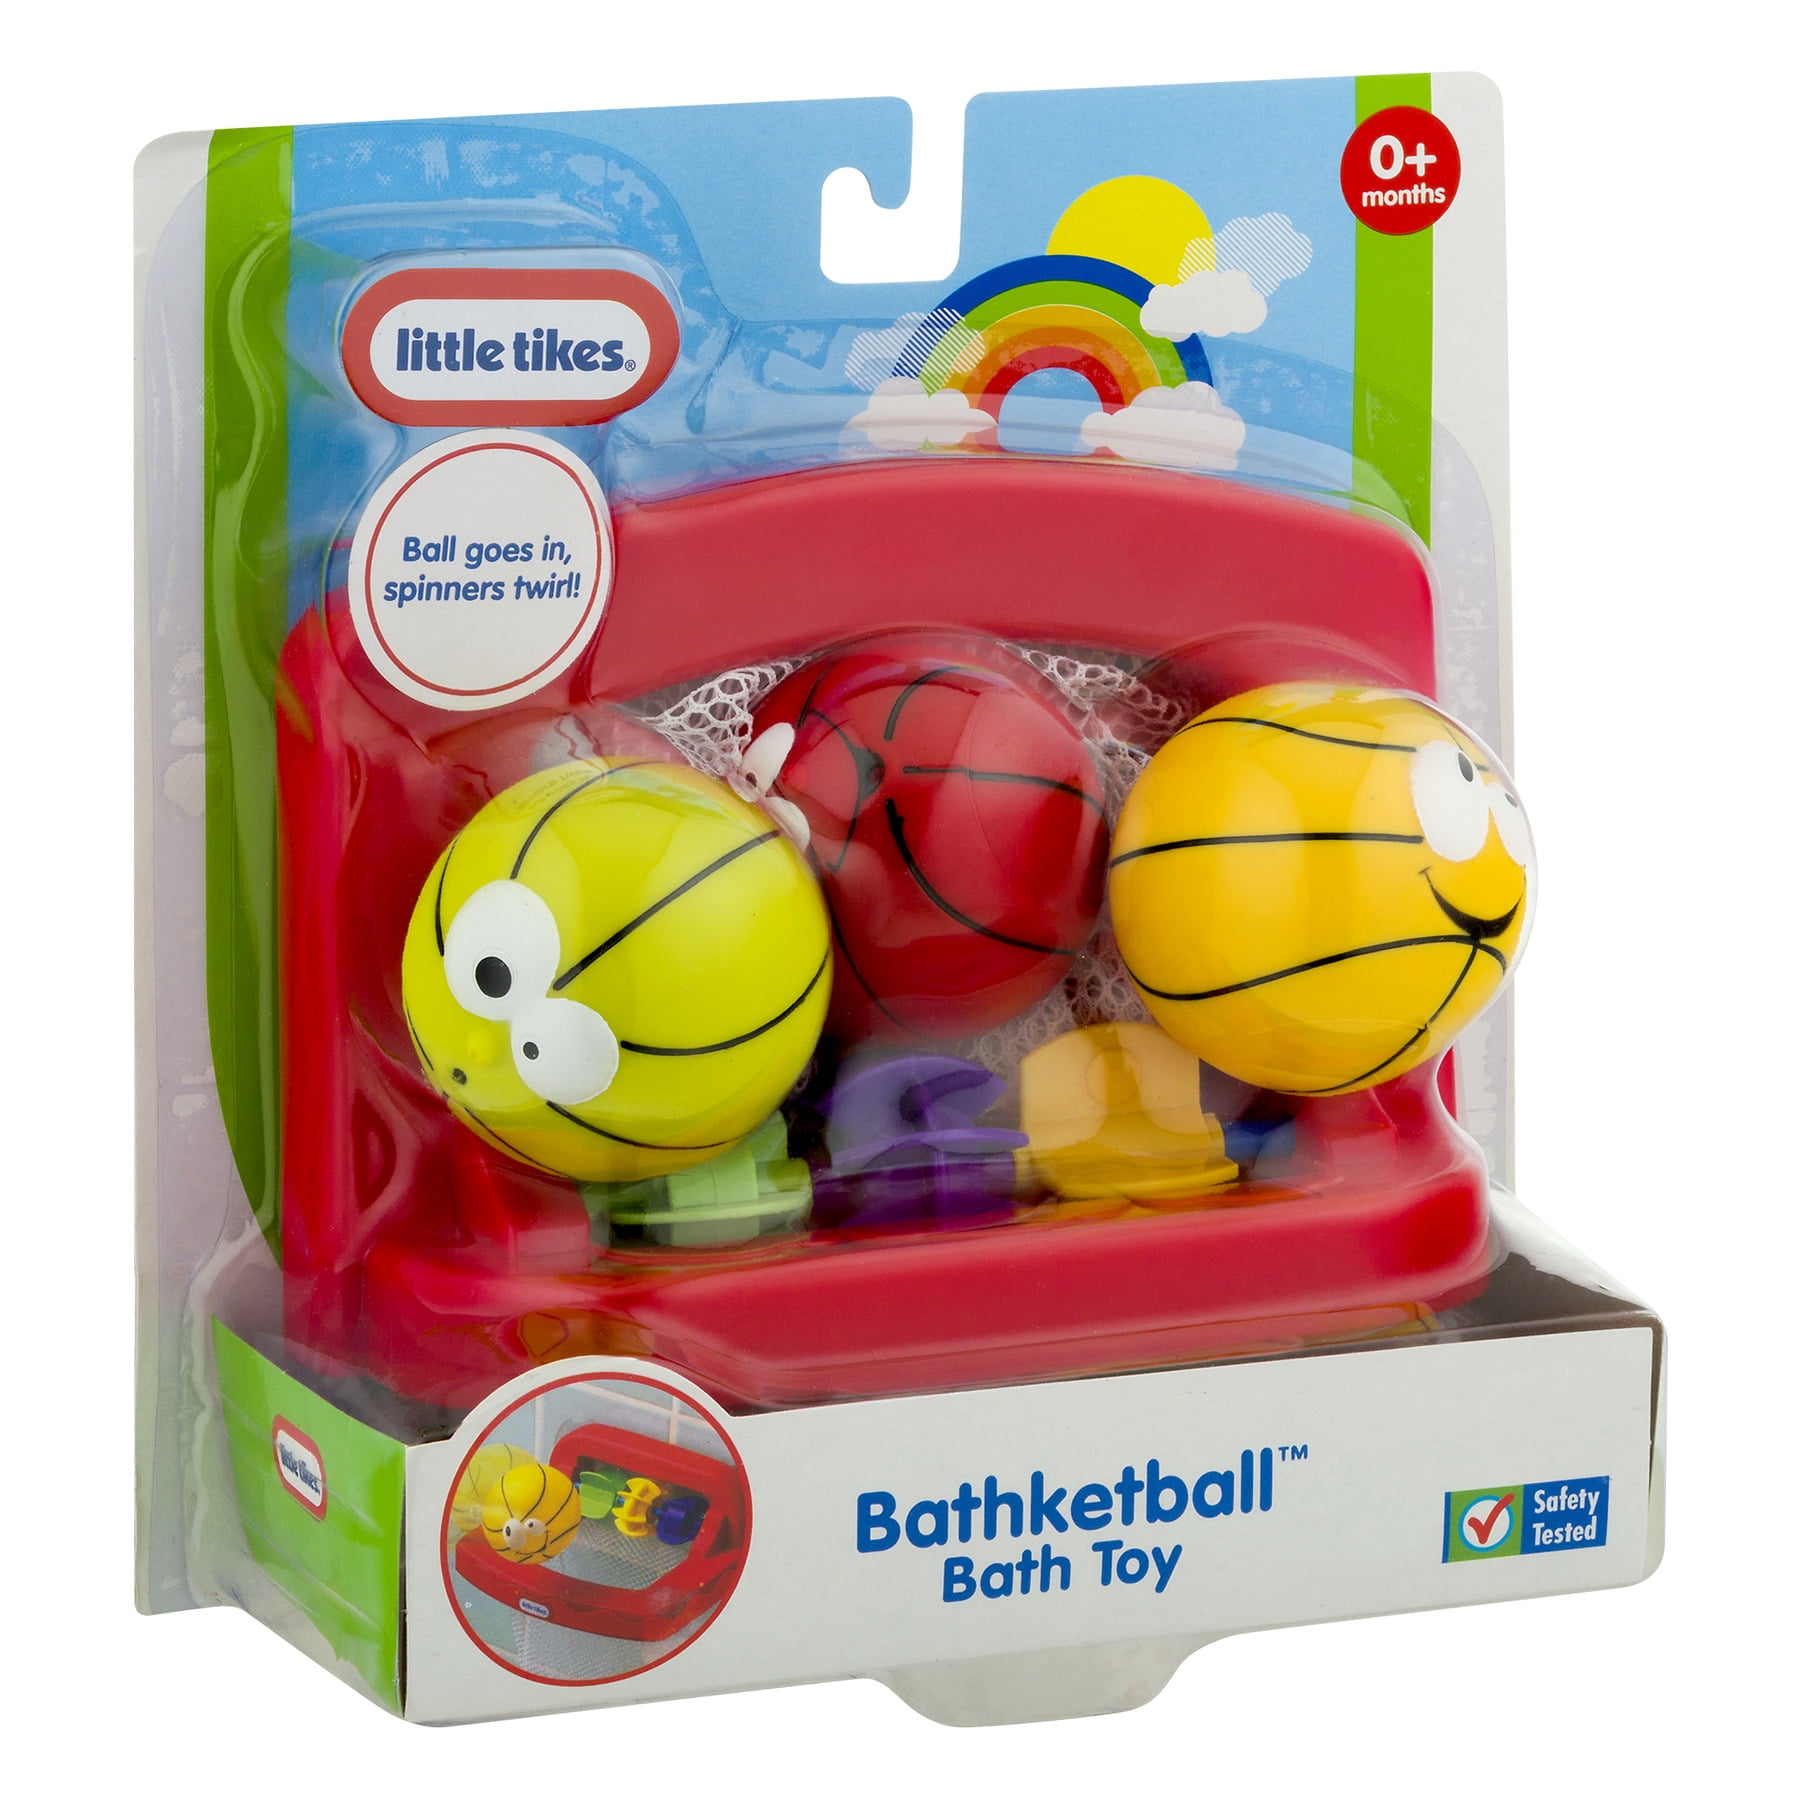 Little Tikes Bathketball Bath Toy 